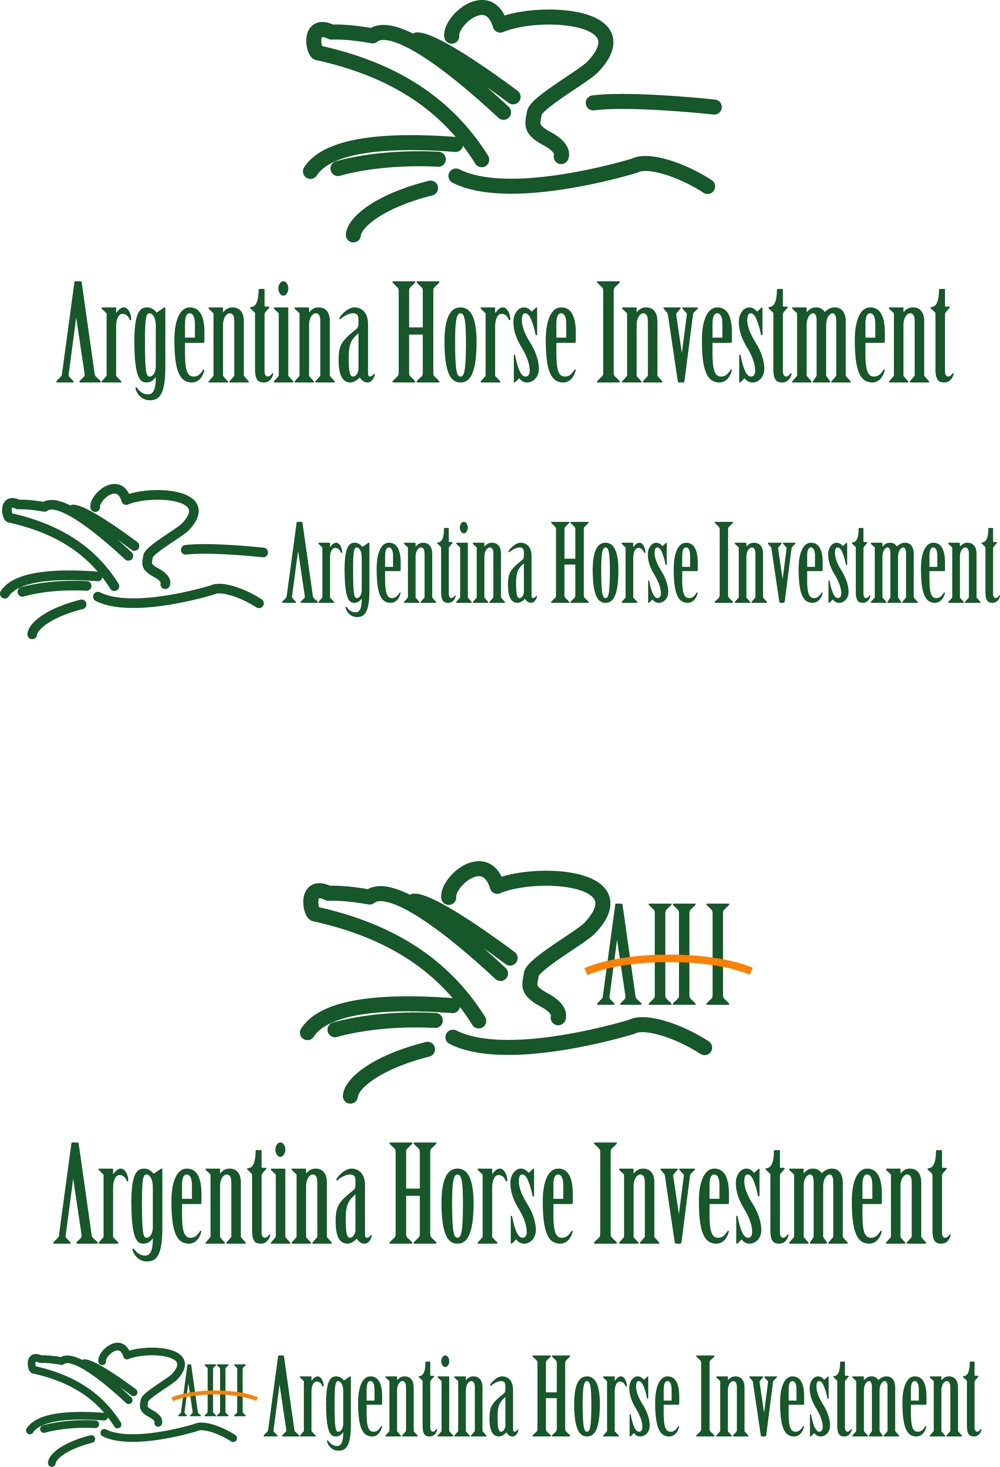 Argentina Horse Investment.jpg